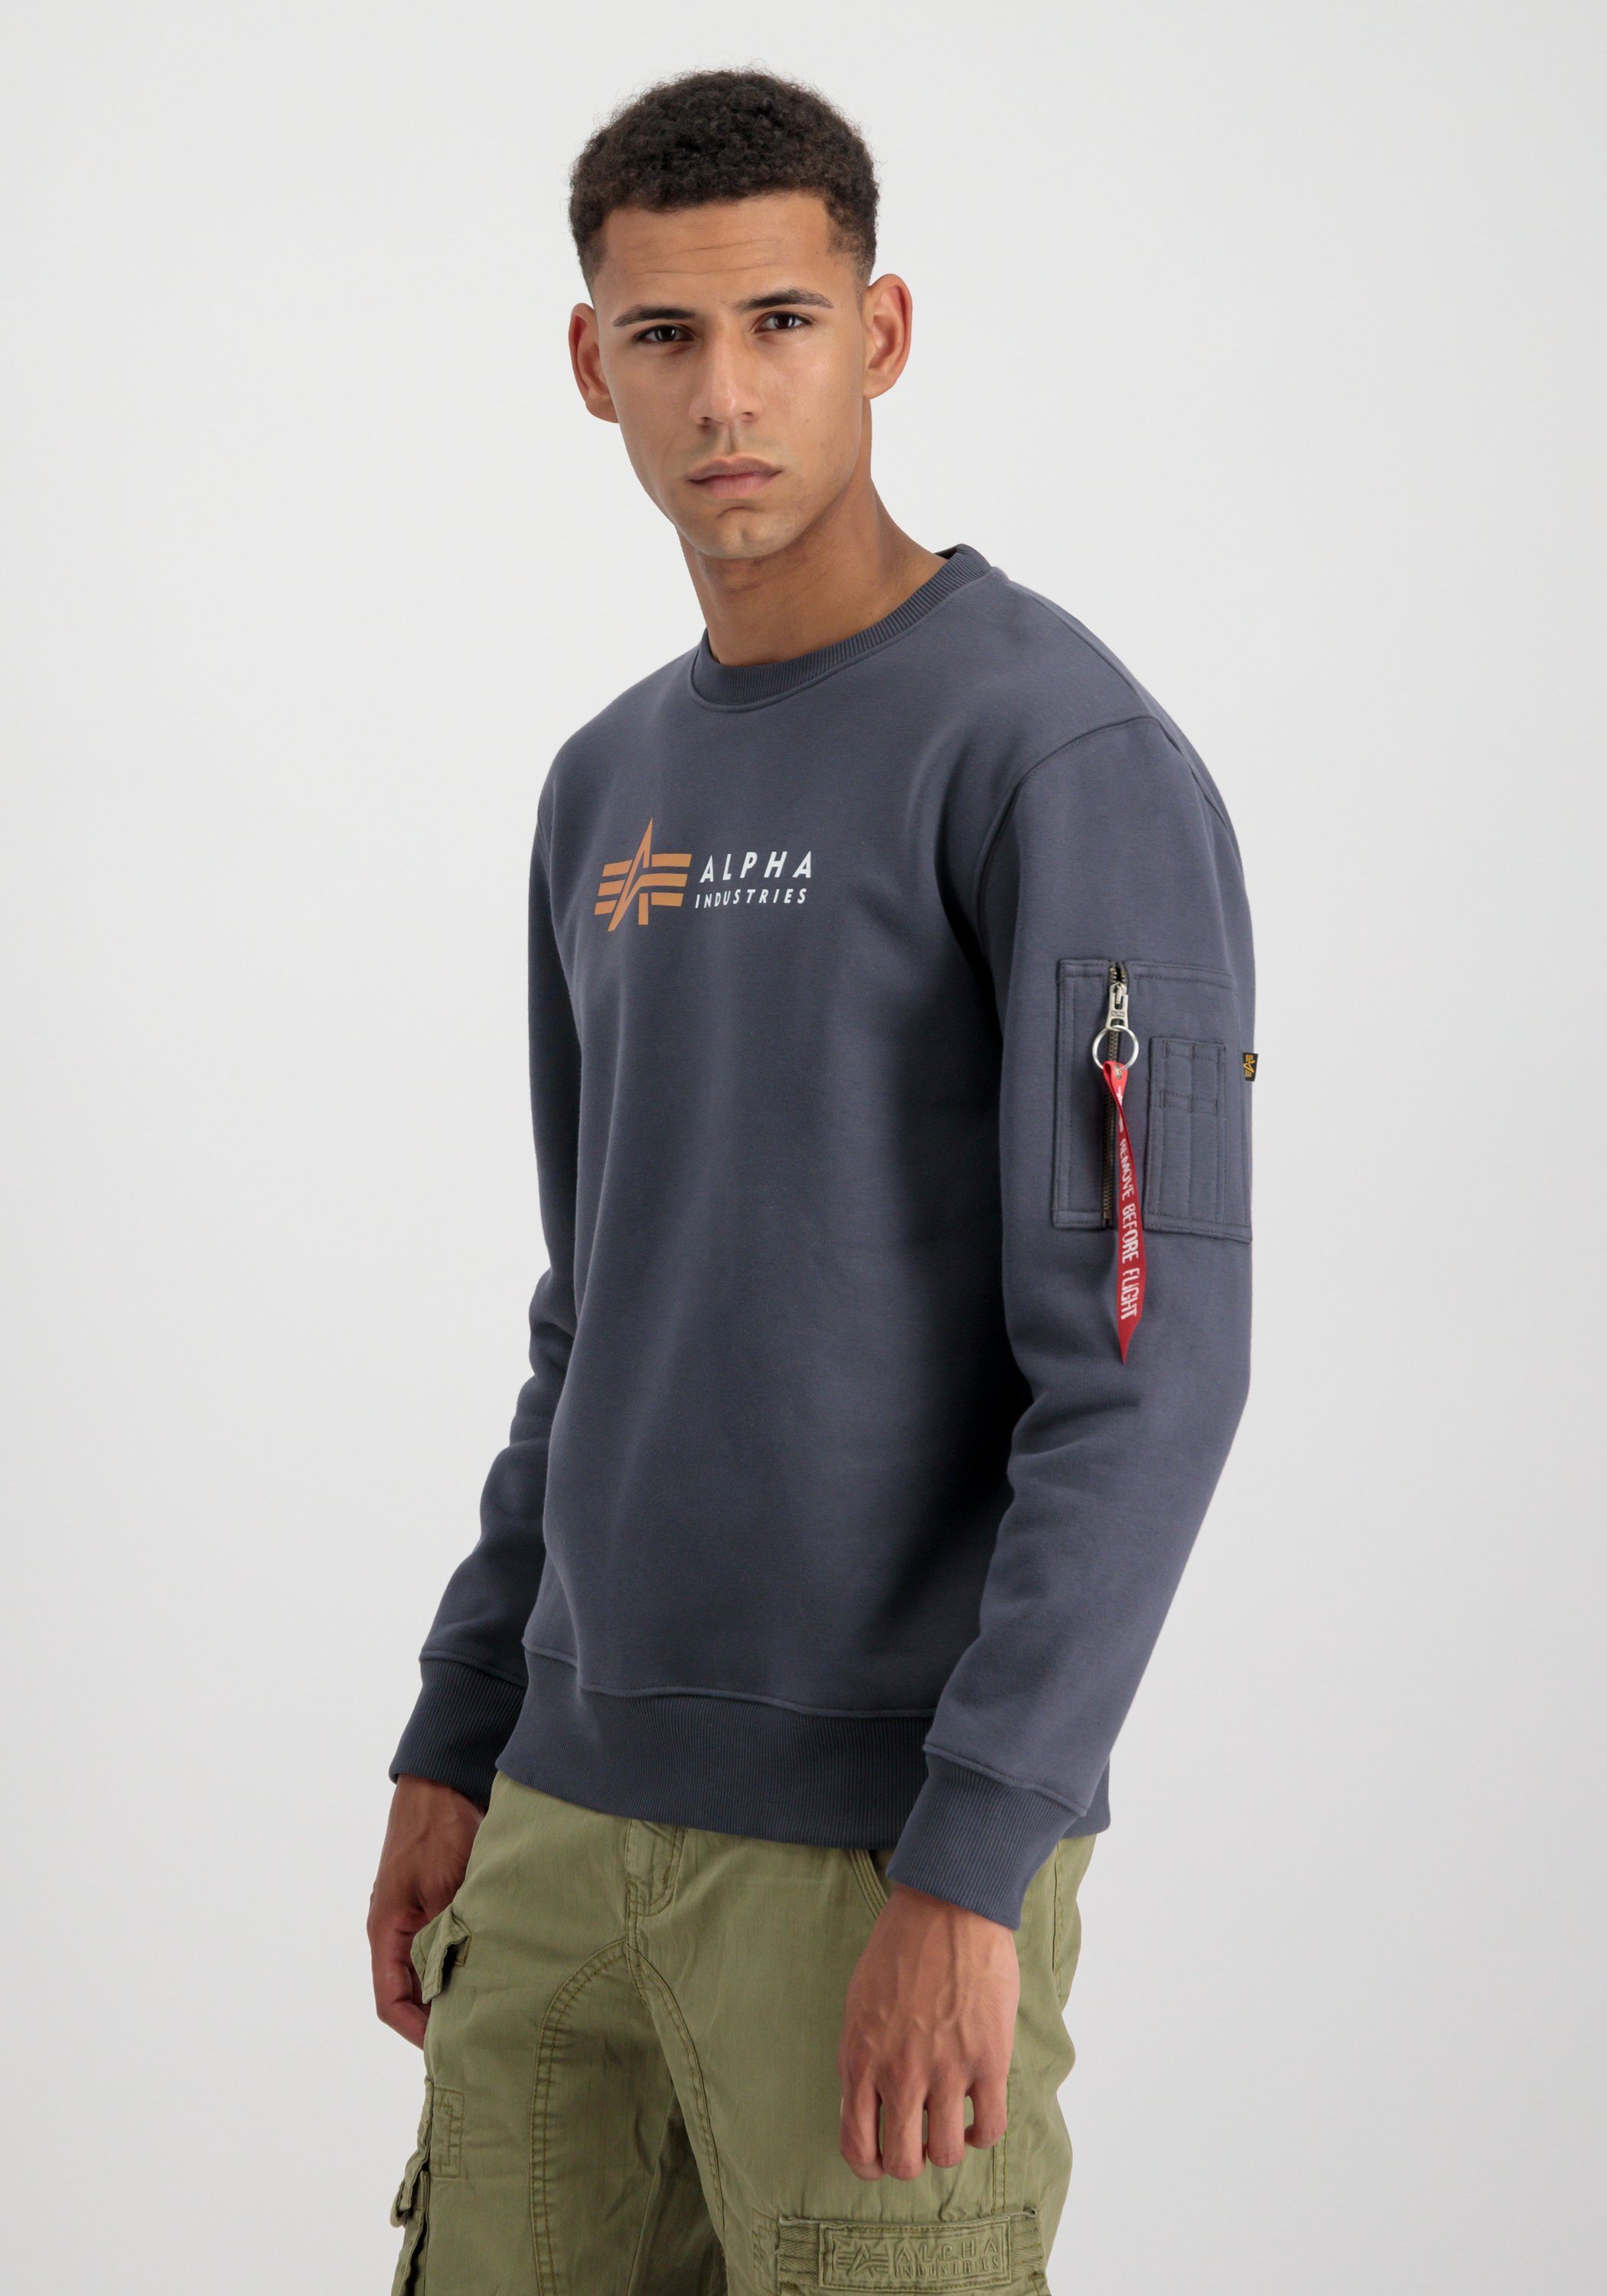 Industries Industries - Sweater Label Sweater Men Sweatshirts Alpha greyblack Alpha Alpha